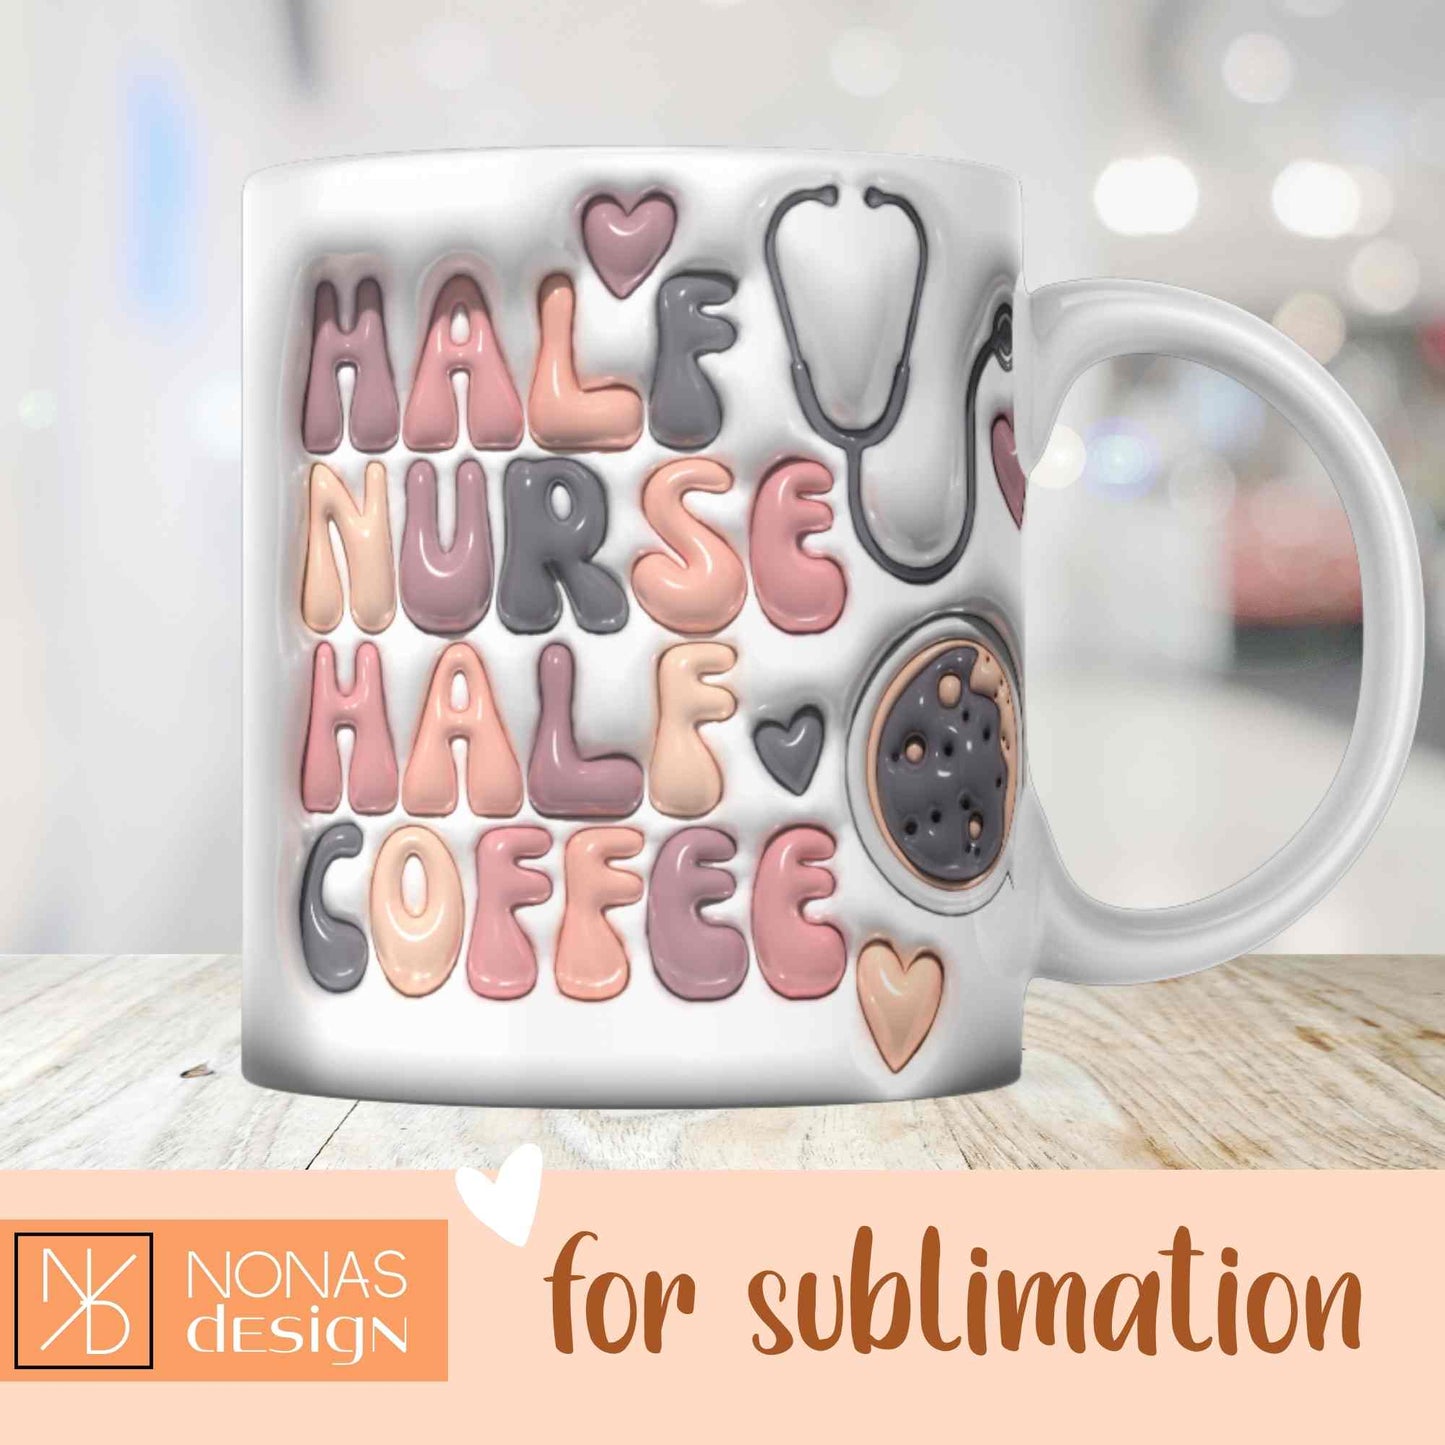 Nurs Half Nurse Half Coffee - 3D